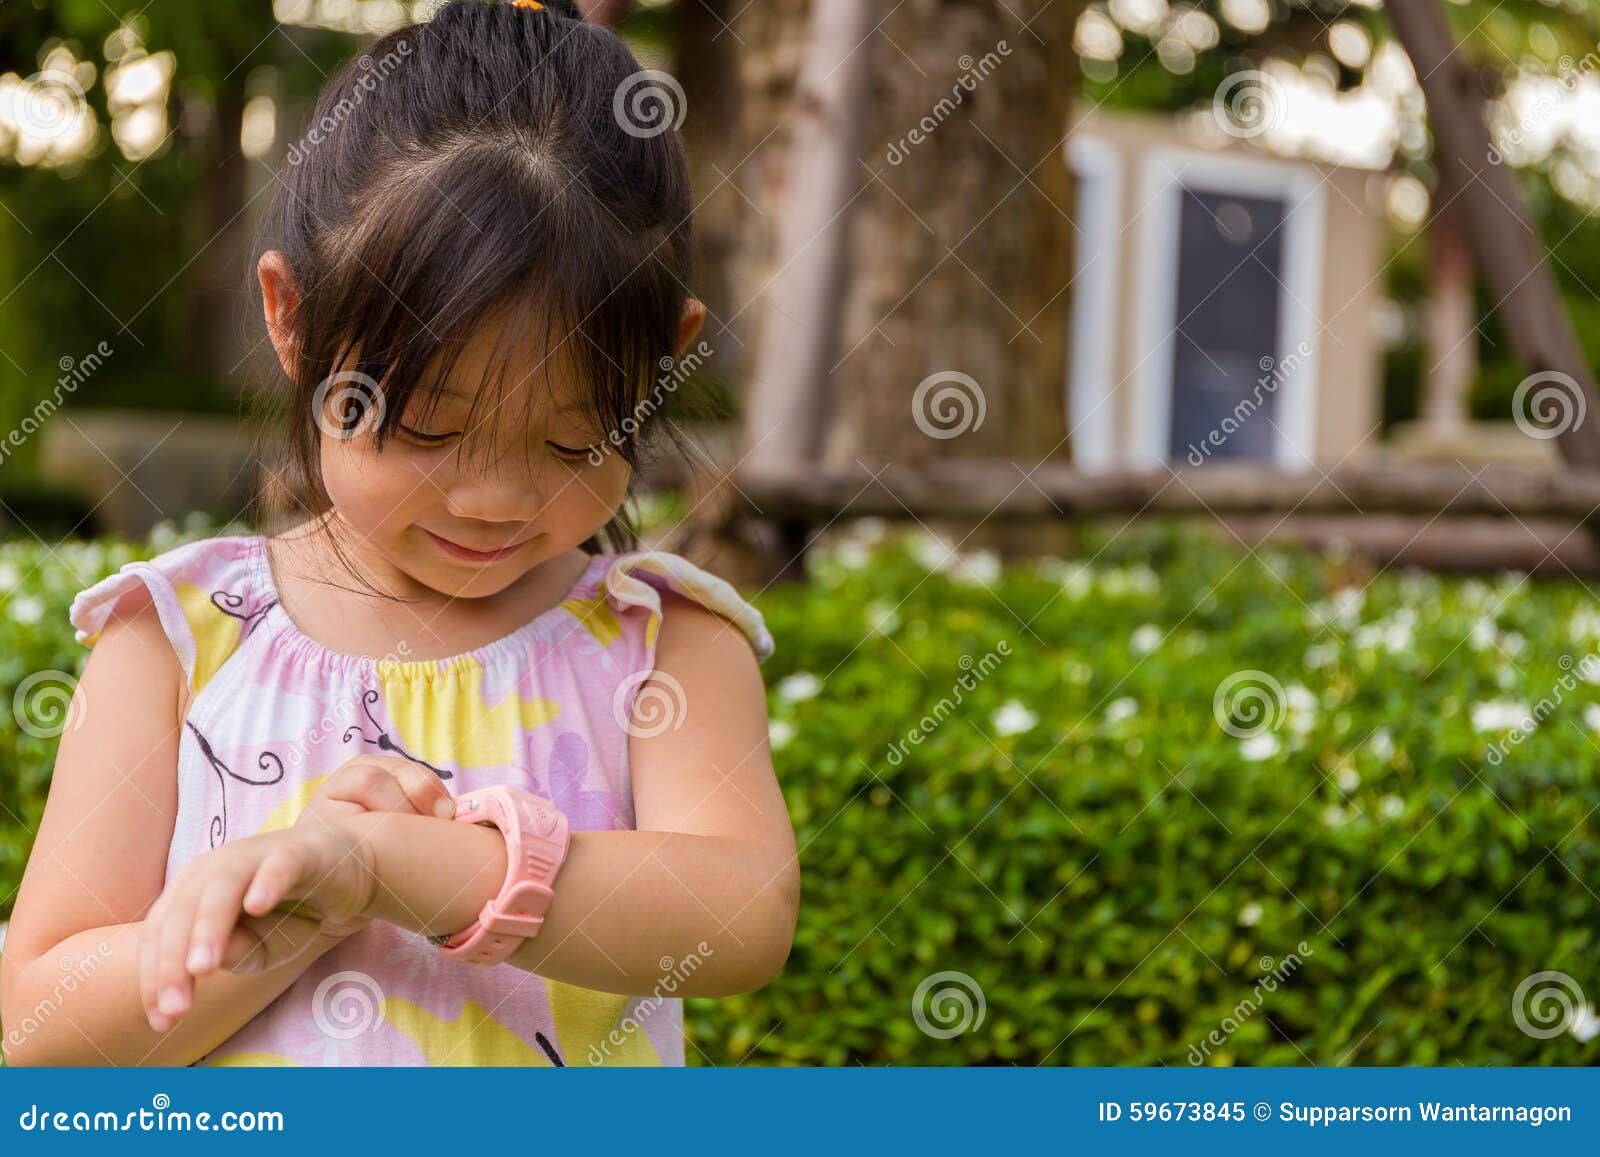 little-girl-using-smartwatch-smart-watch-young-girl-smartwatch-smart-watch-child-standing-garden-her-wrist-59673845.jpg